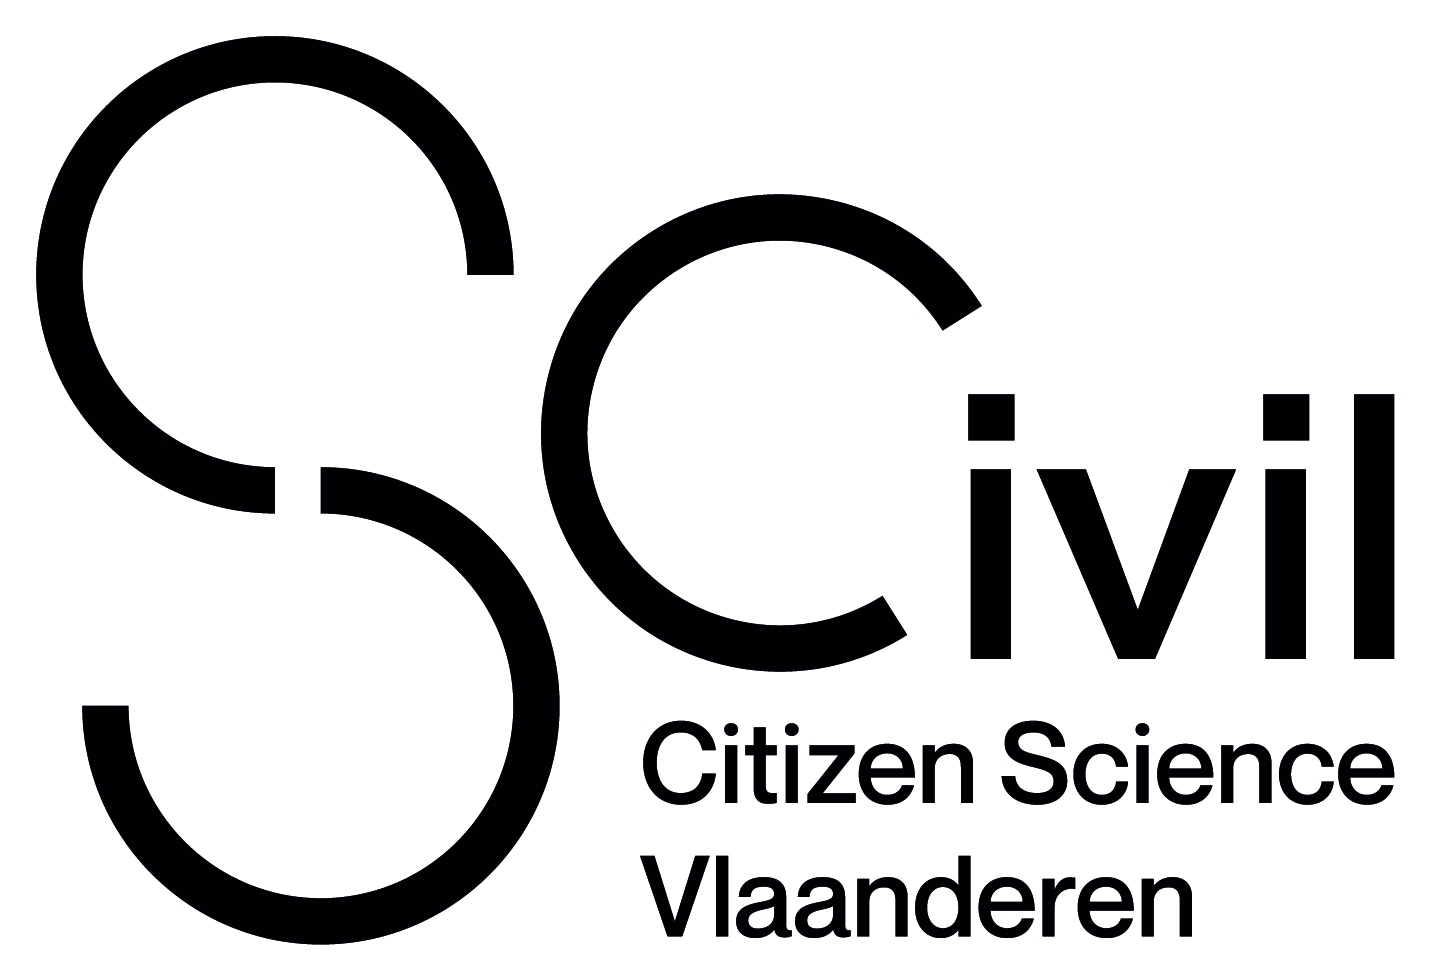 S Civil logo no whitespace baseline zwart